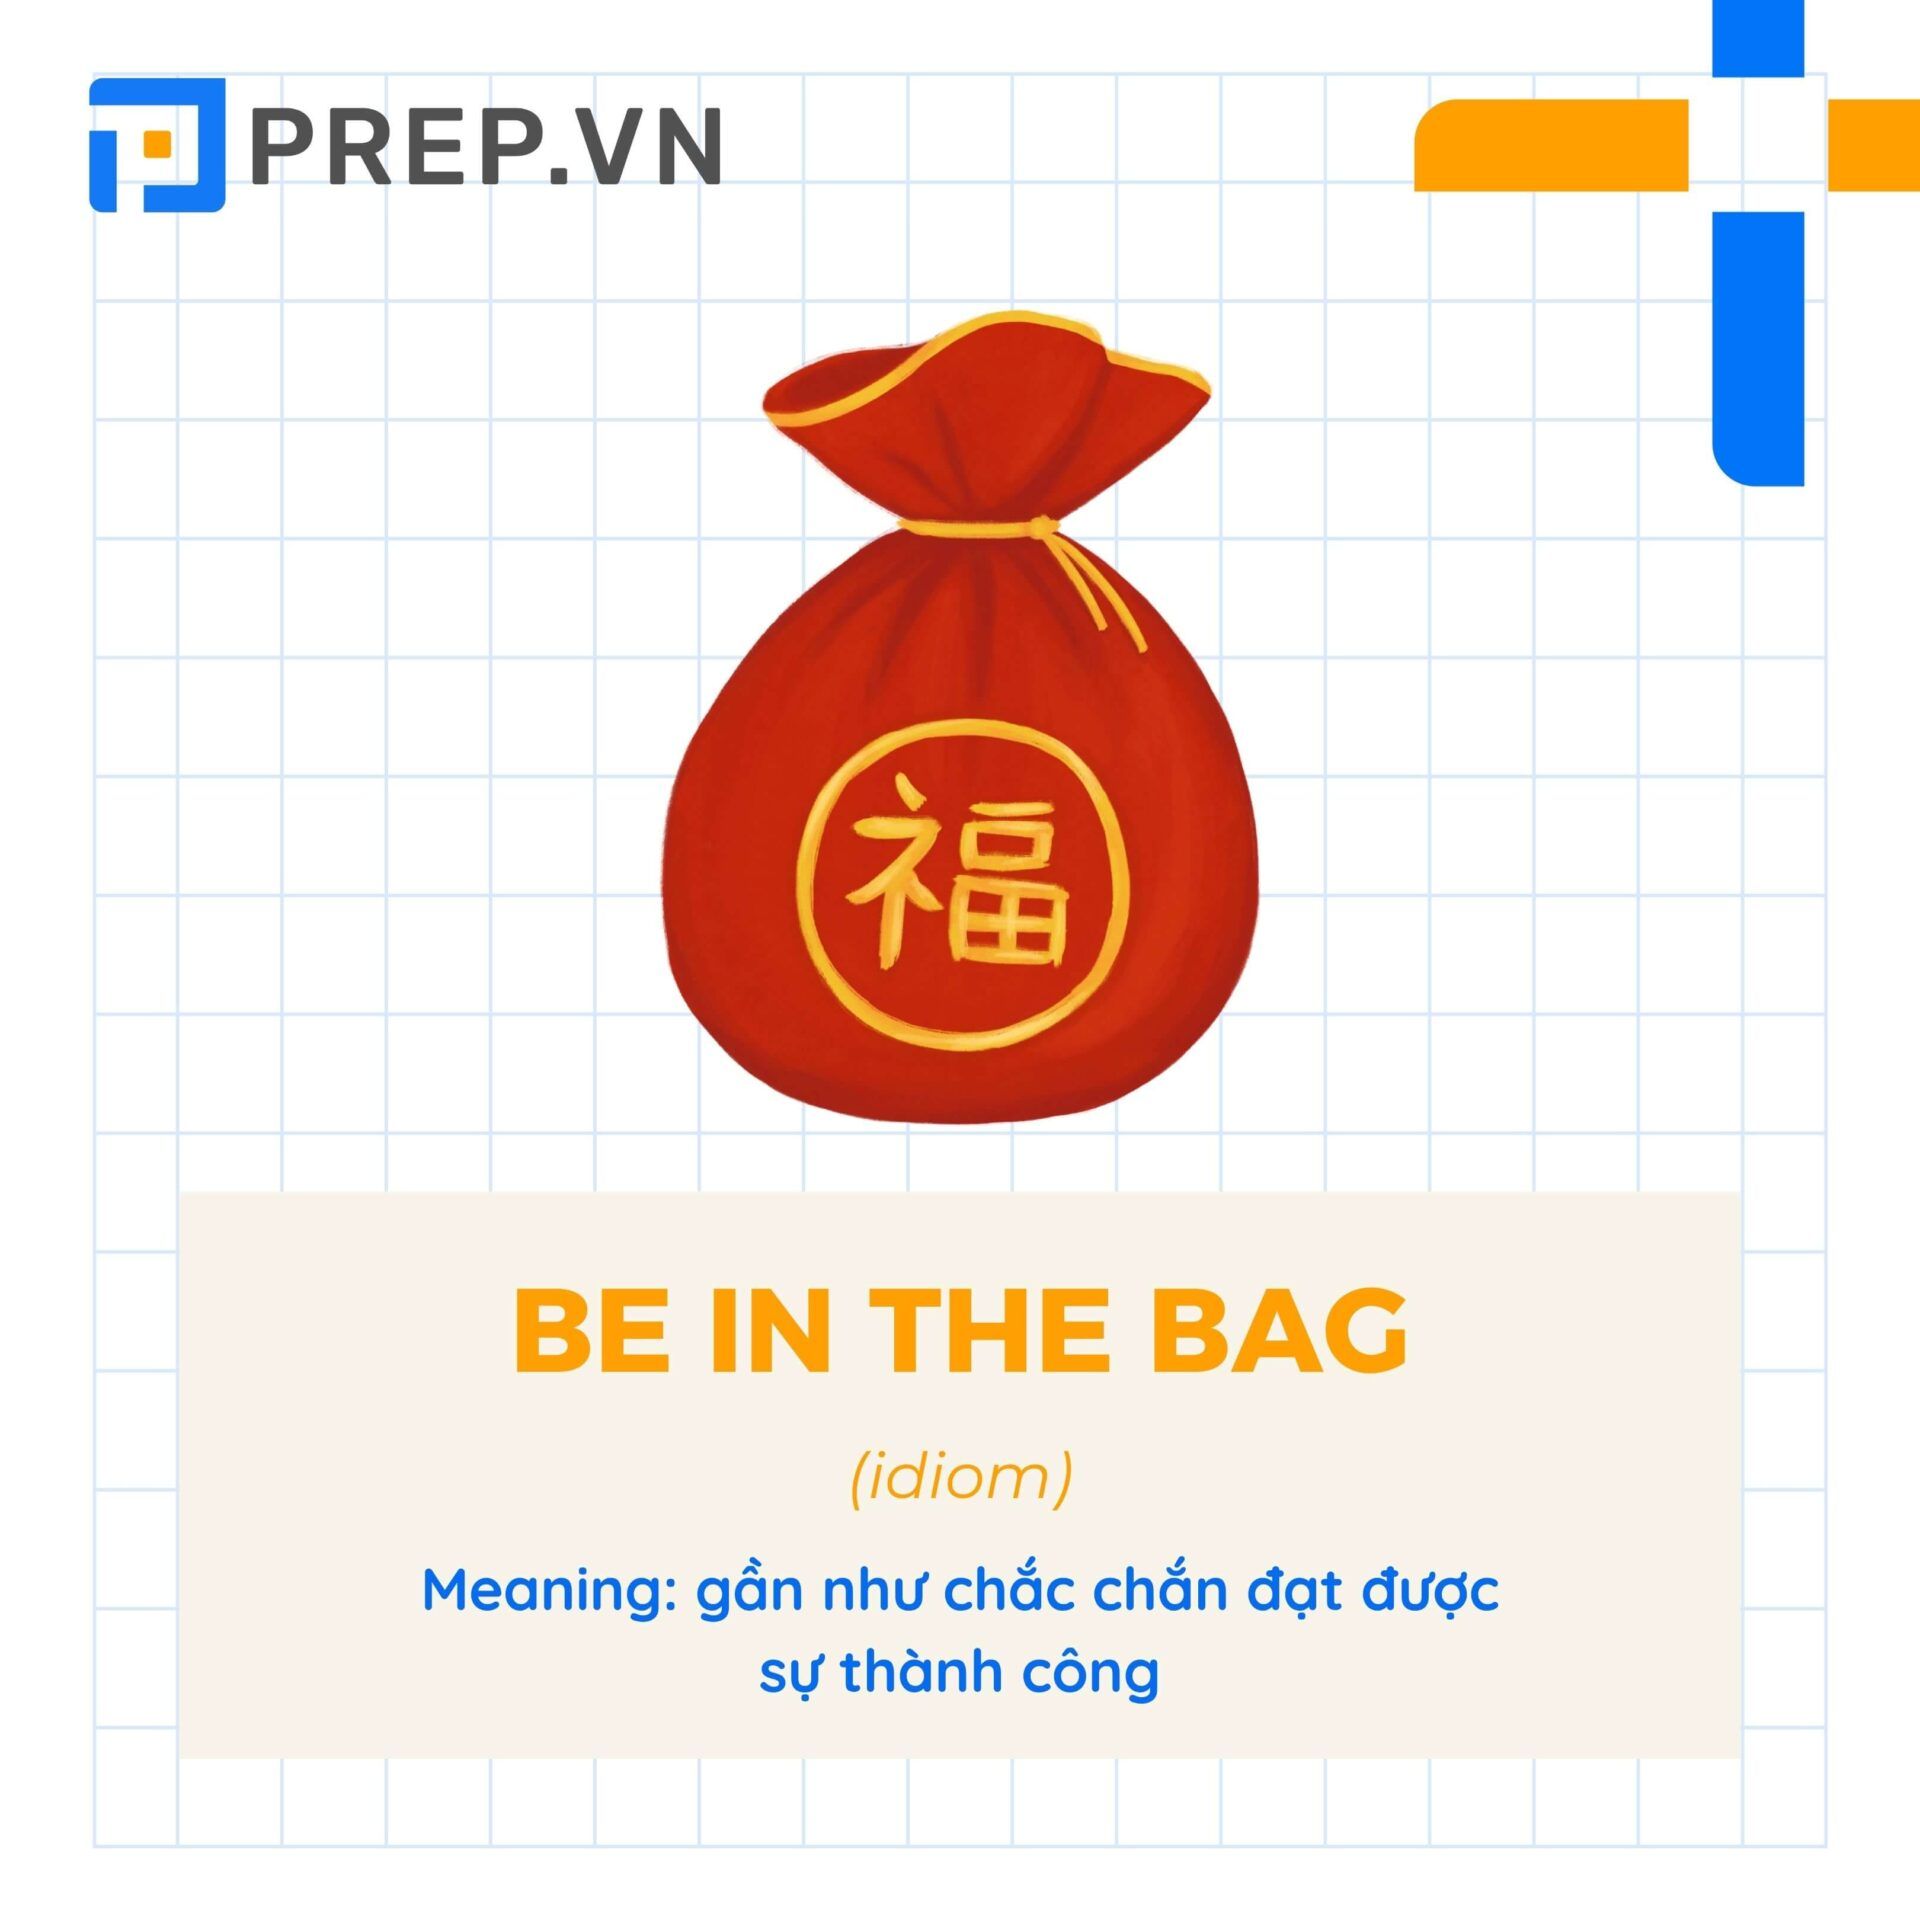 Thành ngữ "Be in the bag"